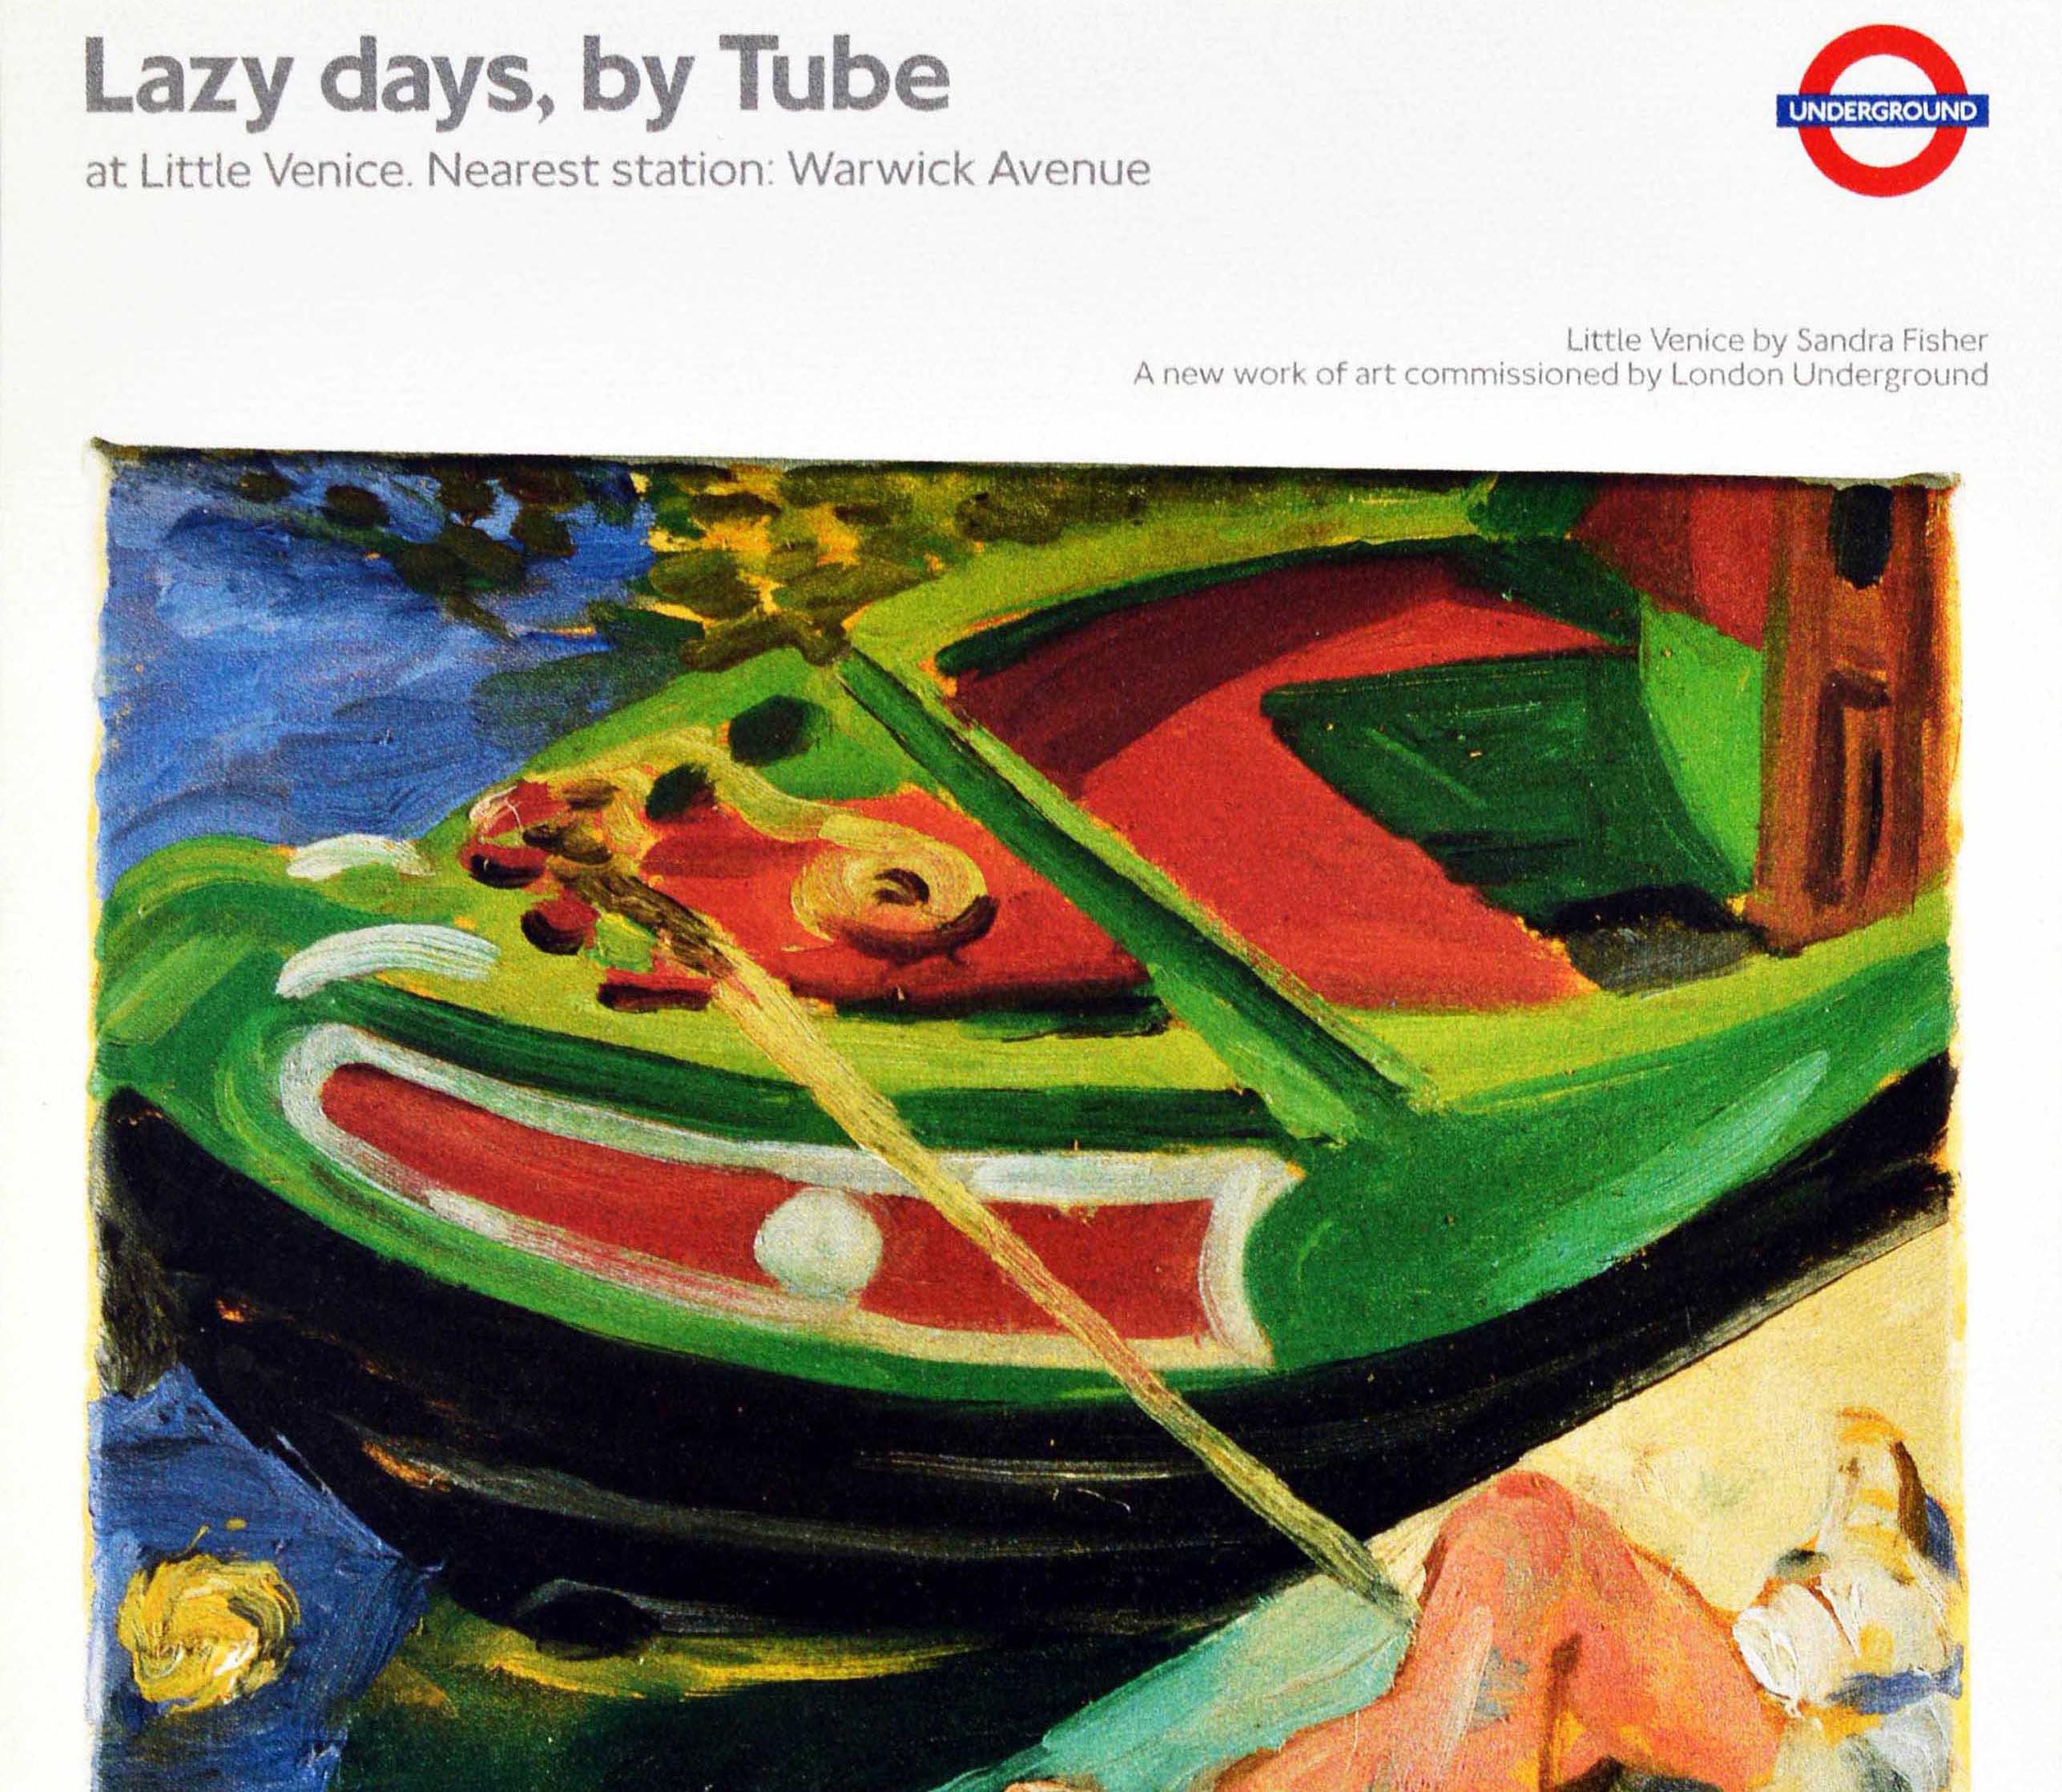 British Original Vintage London Underground Poster Lazy Days By Tube Little Venice LT For Sale